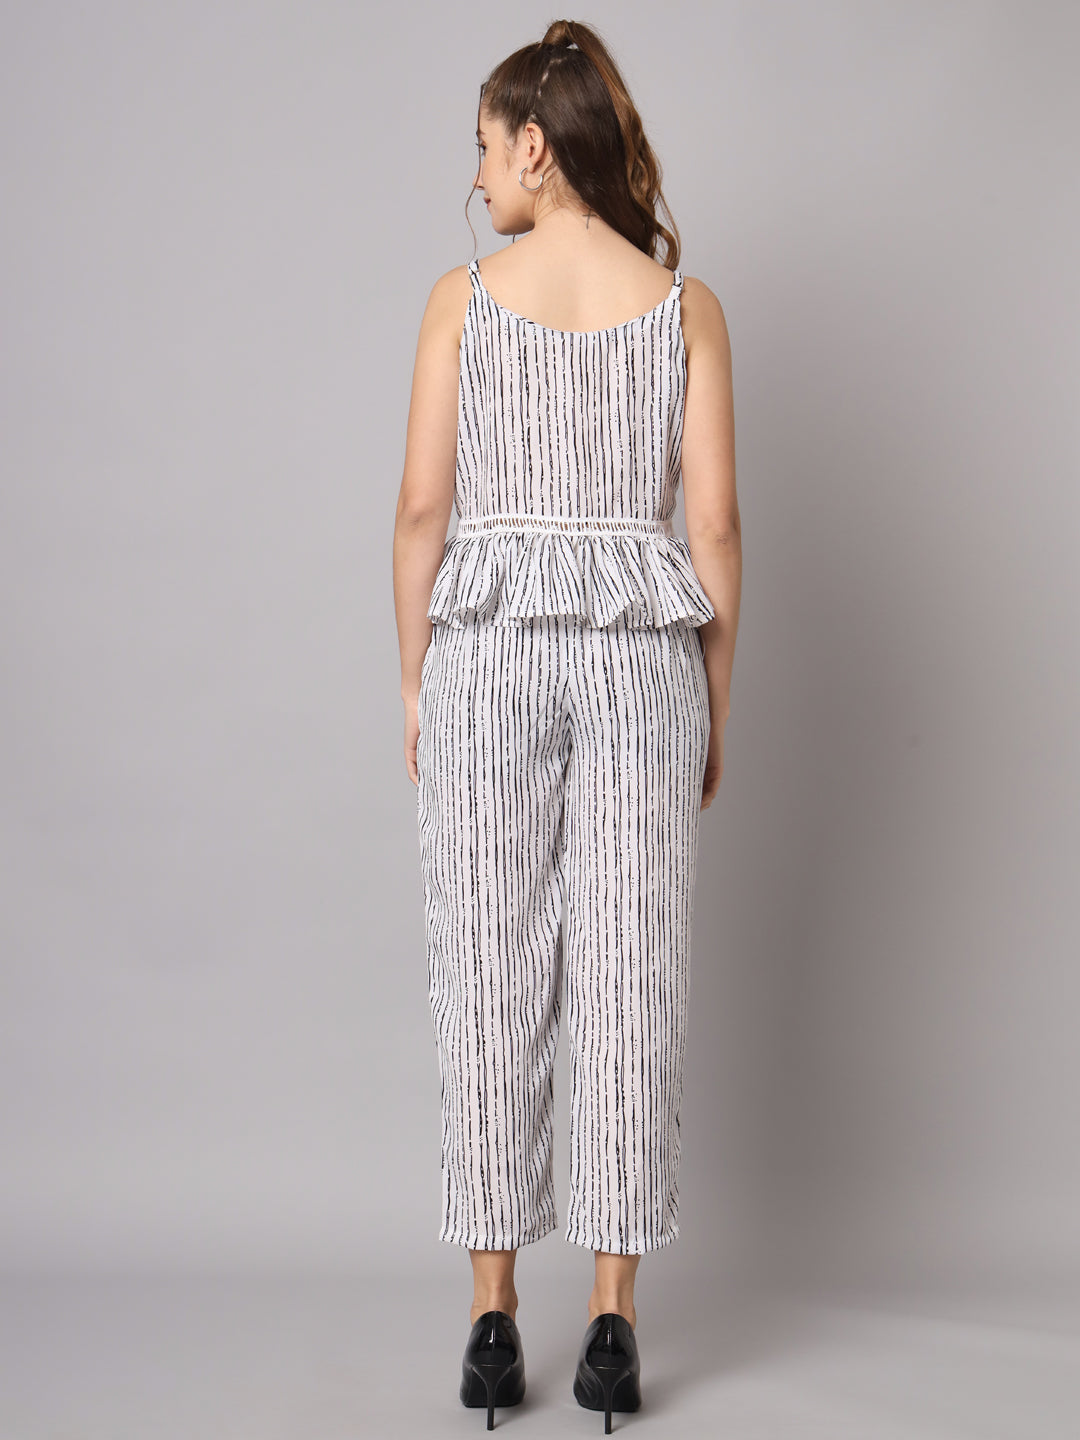 VredeVogel Women's Printed Polyester Rayon Regular Fit Striped Jumpsuit Maxi Dress